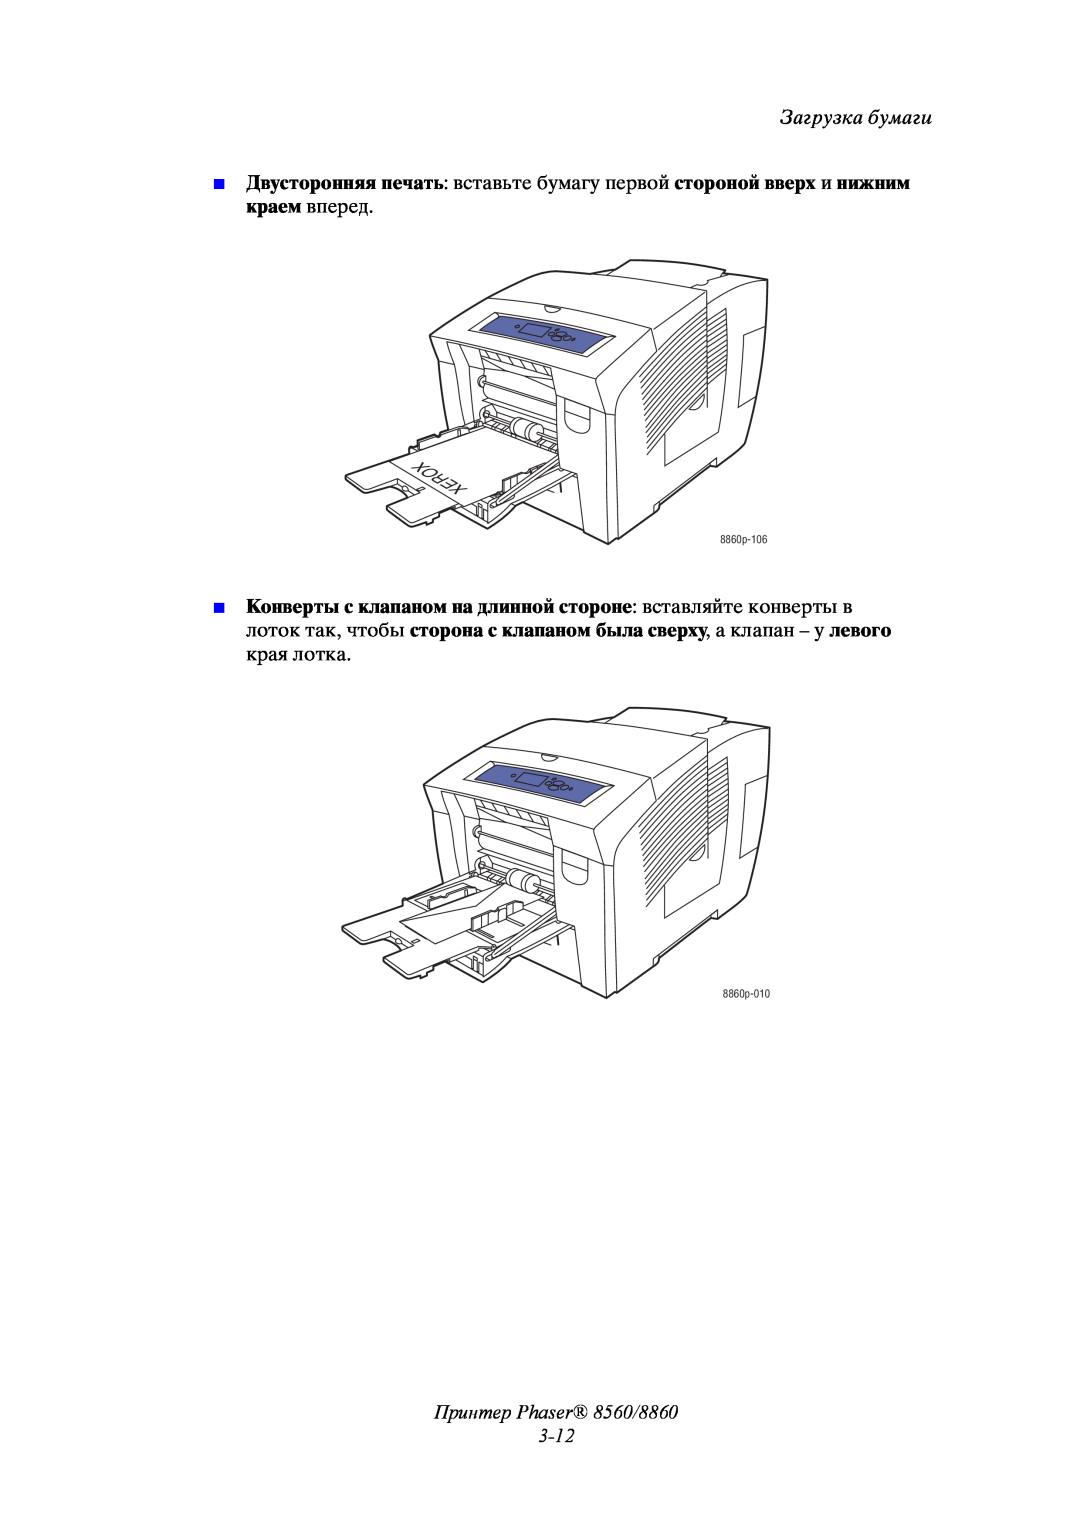 Xerox manual Принтер Phaser 8560/8860 3-12, Загрузка бумаги, 8860p-106, 8860p-010 